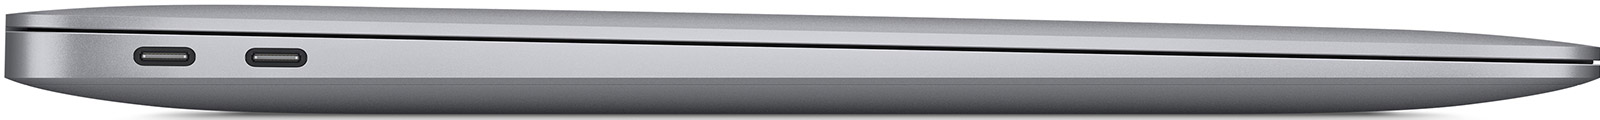 Apple-MacBook-Air-13-3-M1-8-Core-16-GB-512-GB-8-Core-Grafik-Space-Grau-US-Ame-05.jpg